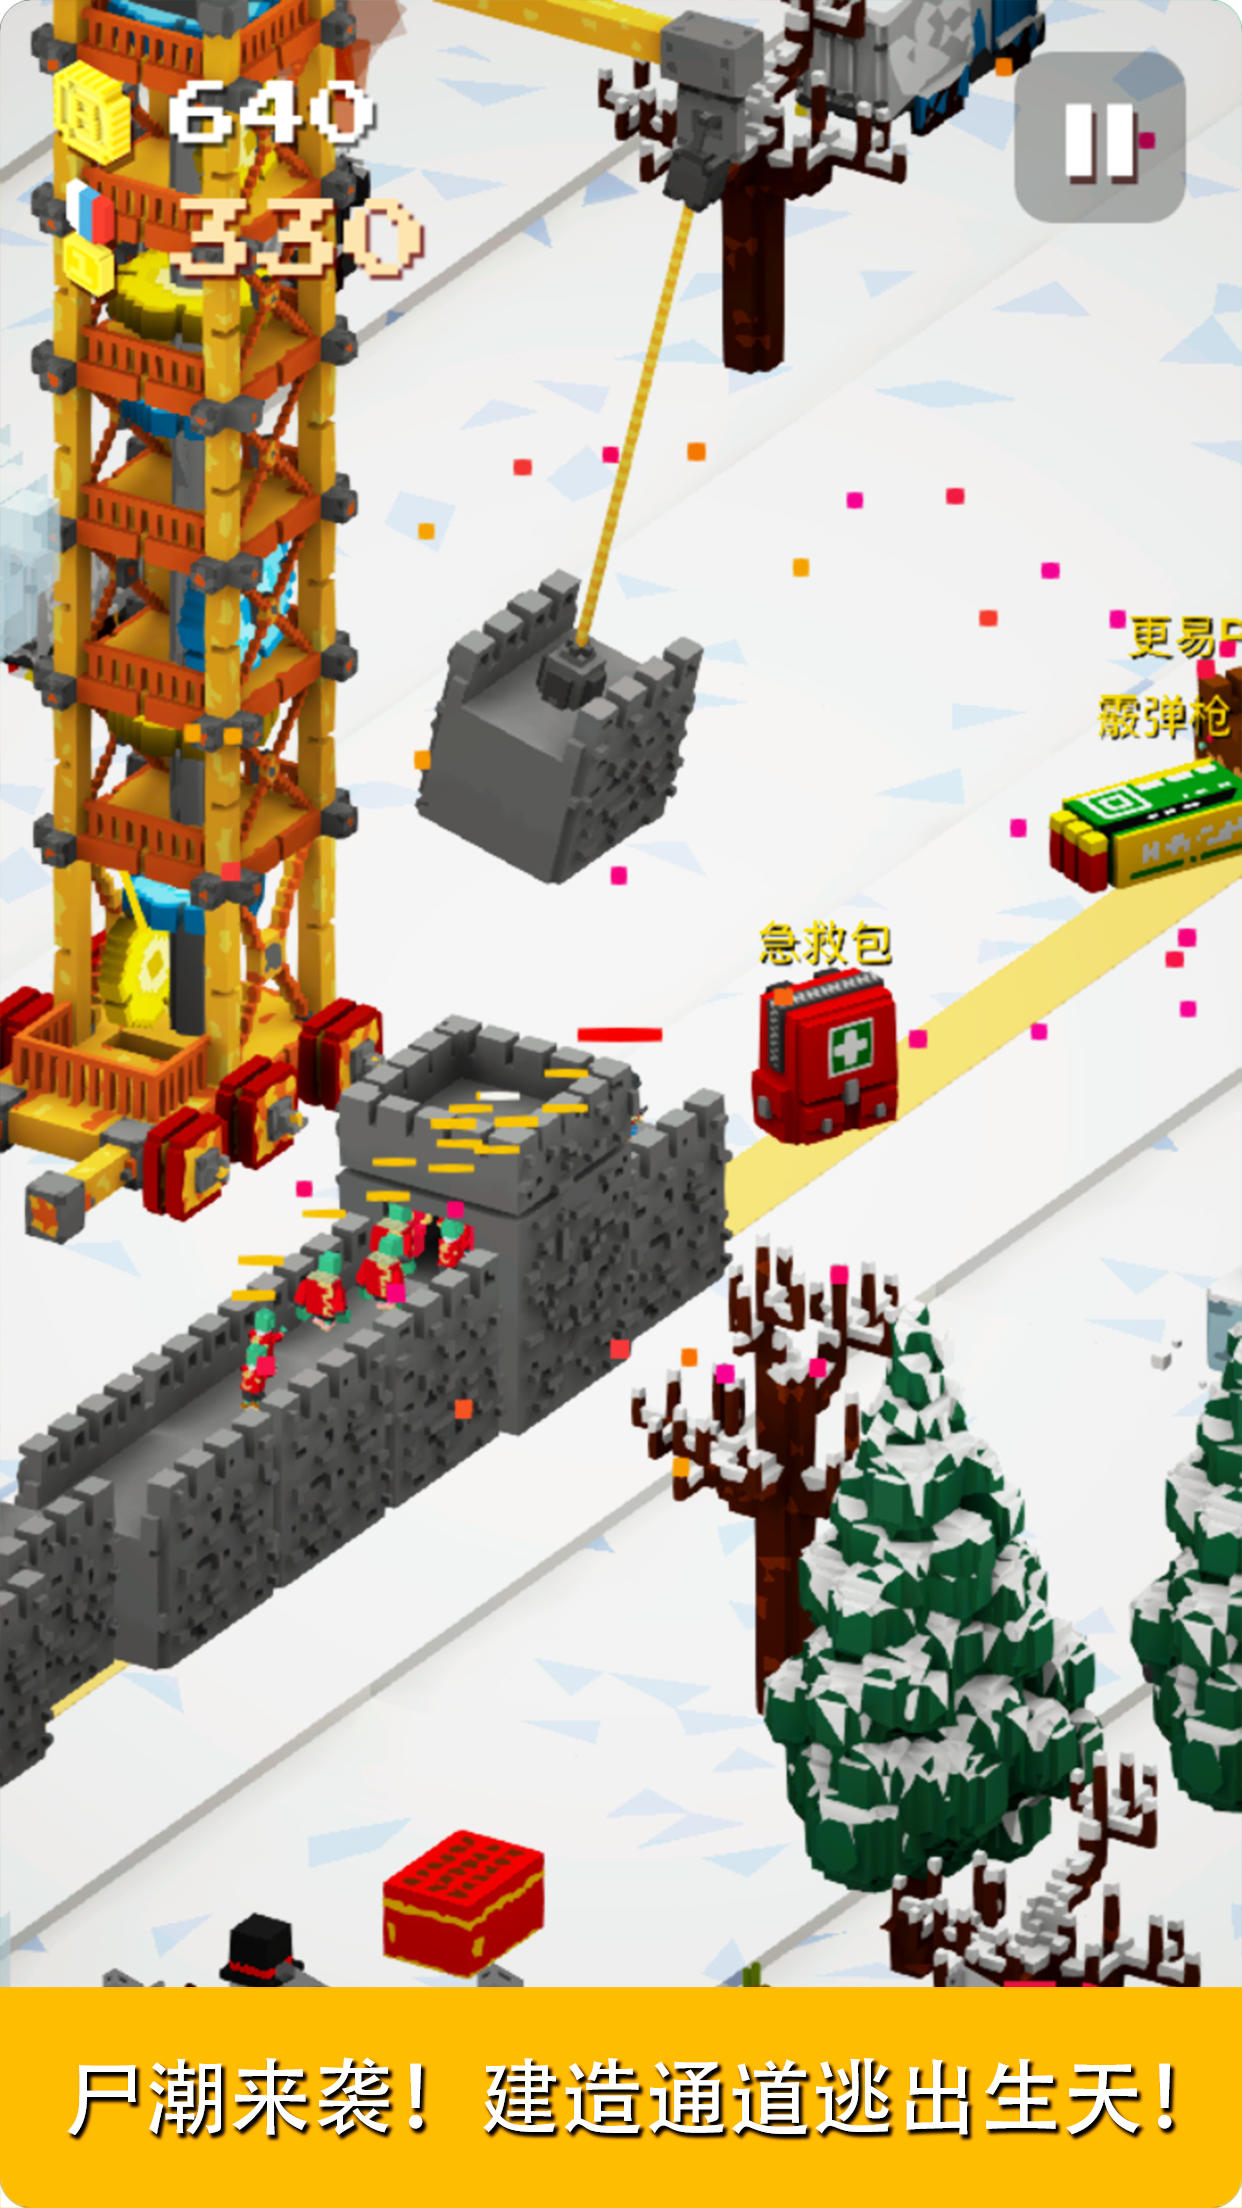 Screenshot 1 of Mover tijolos juntos 1.1.1